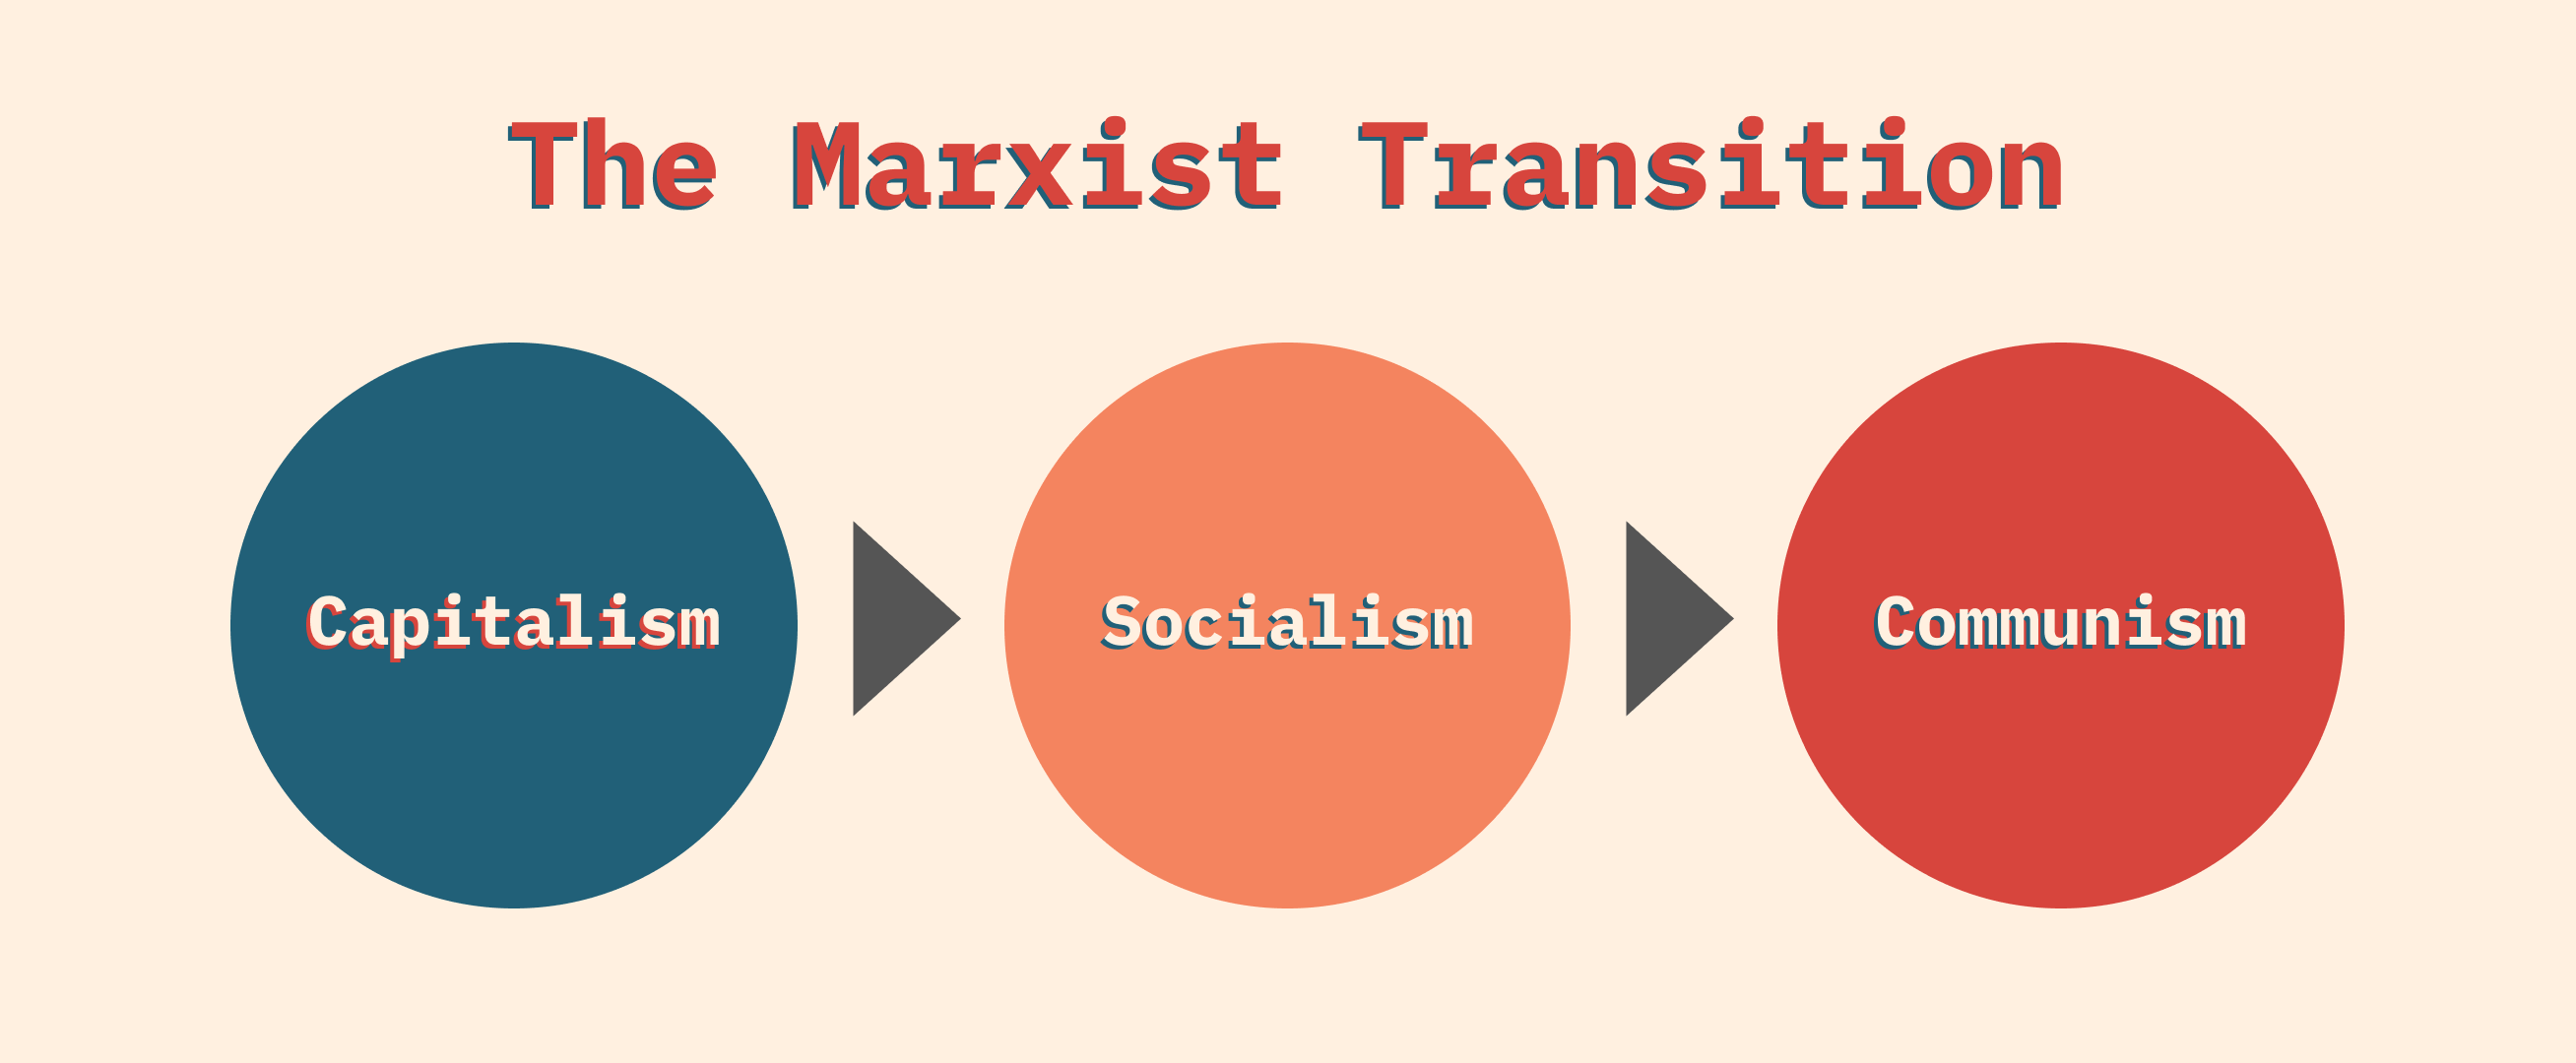 marxist theory beliefs